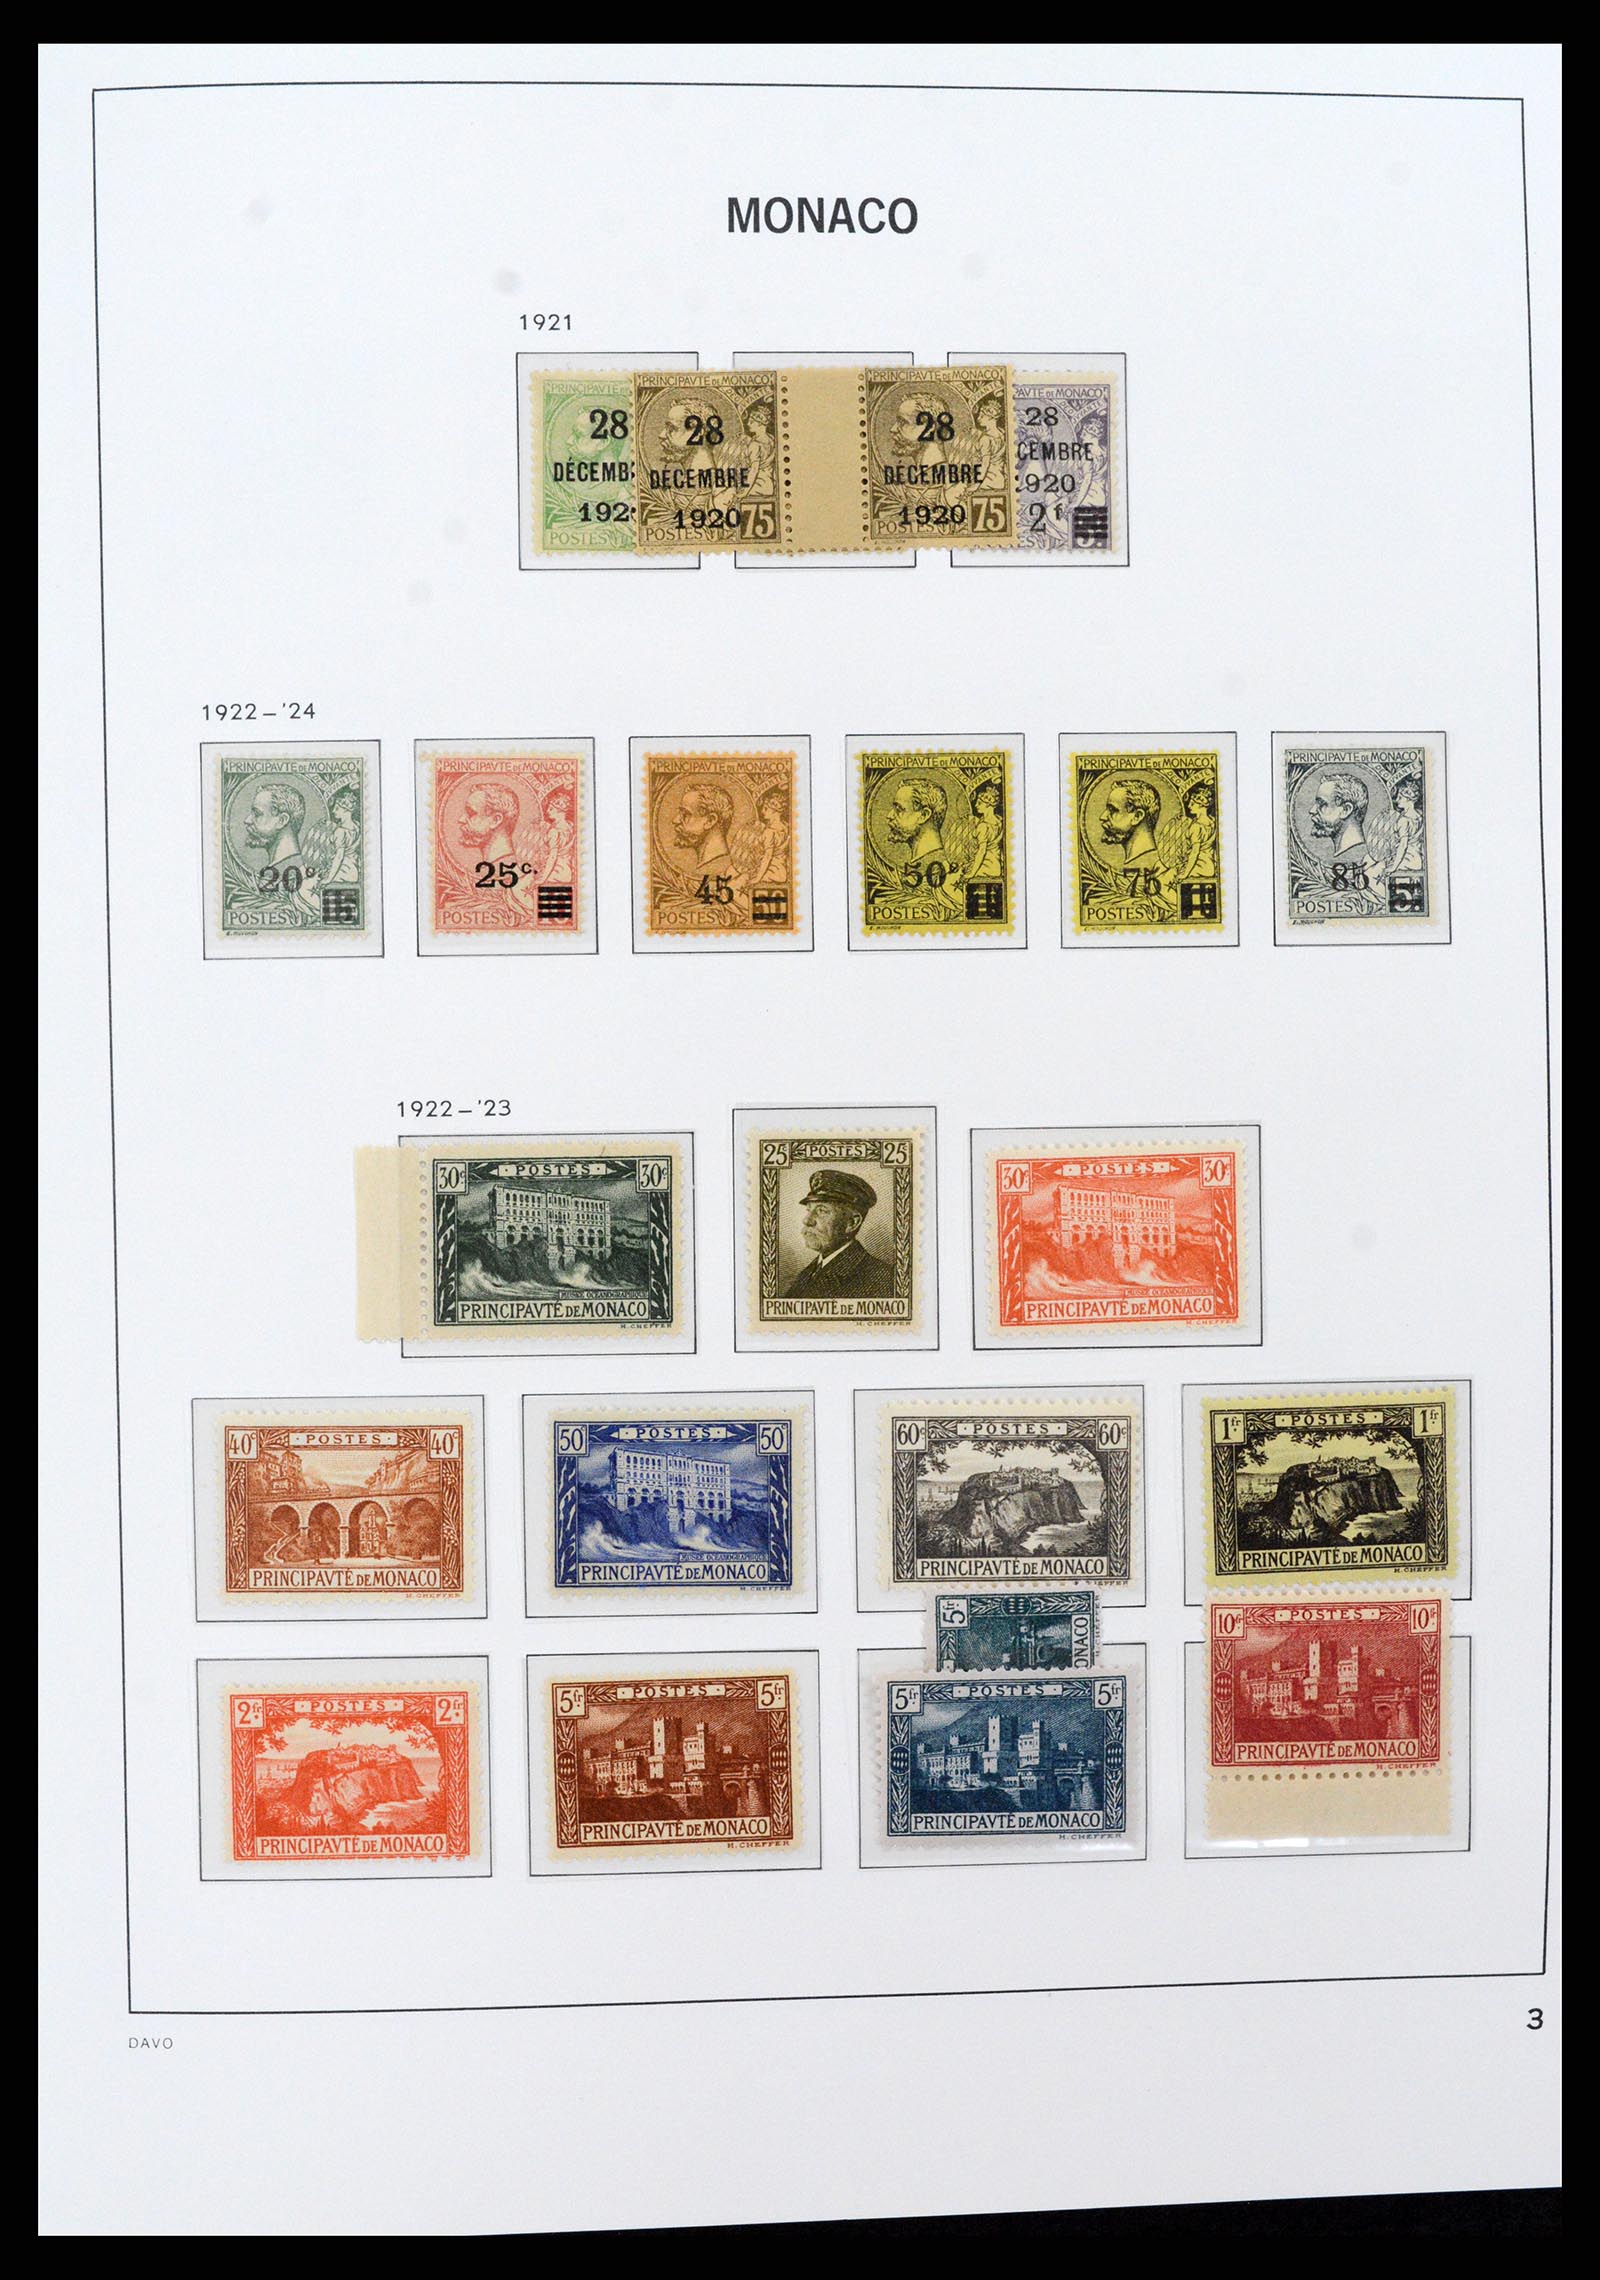 37279 003 - Stamp collection 37279 Monaco 1885-1969.